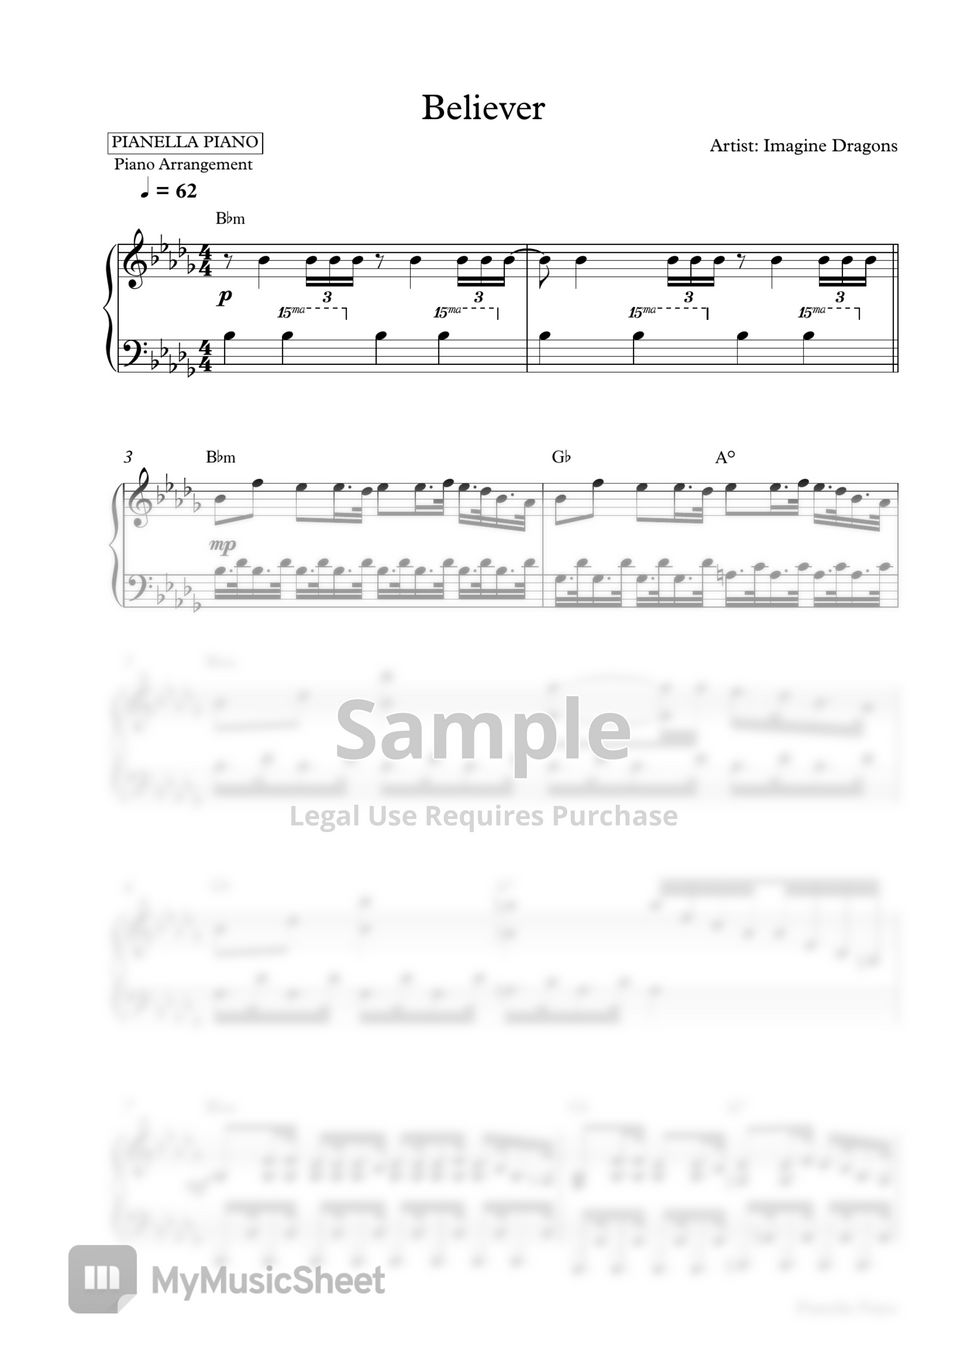 Imagine Dragons - Believer (Piano Sheet) Sheets by Pianella Piano